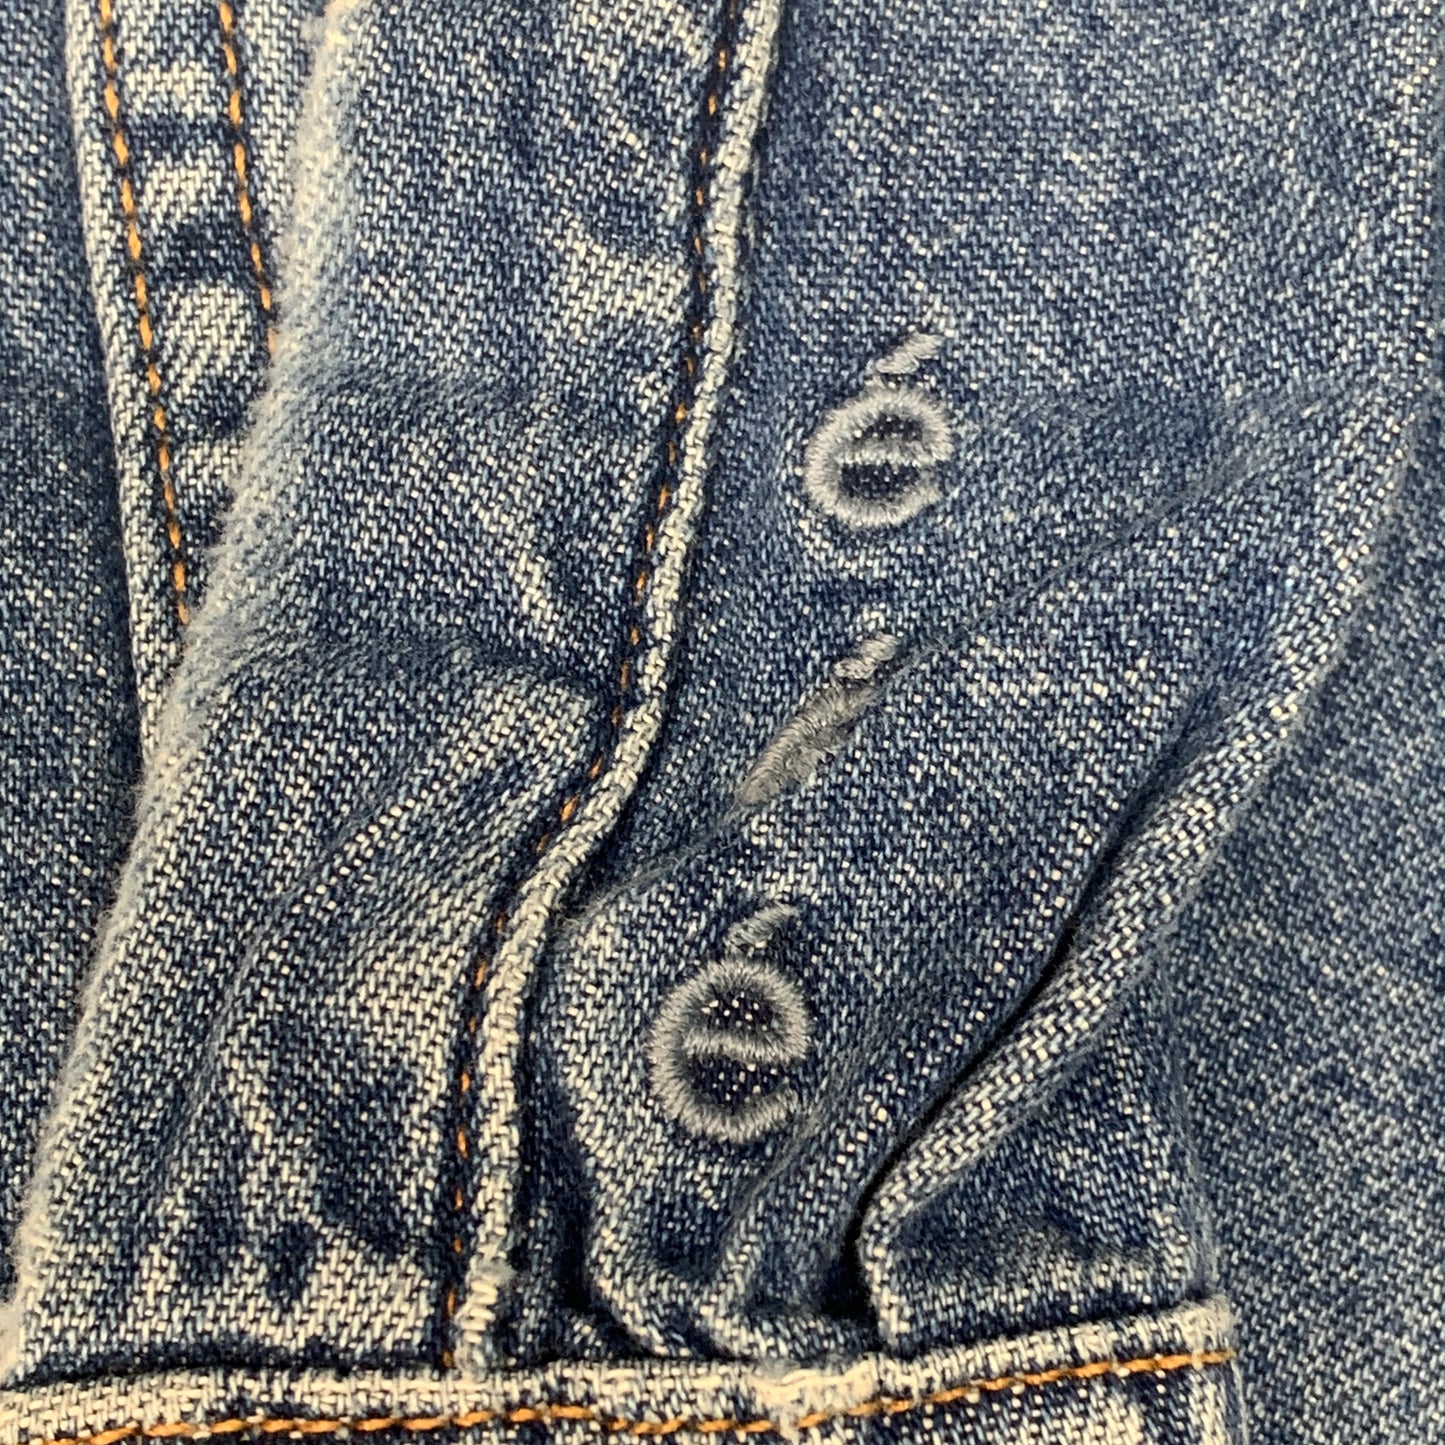 ETICA Harriette Shirt Jacket w/ Front Top Pockets & Collar River Rock Size S EW143309